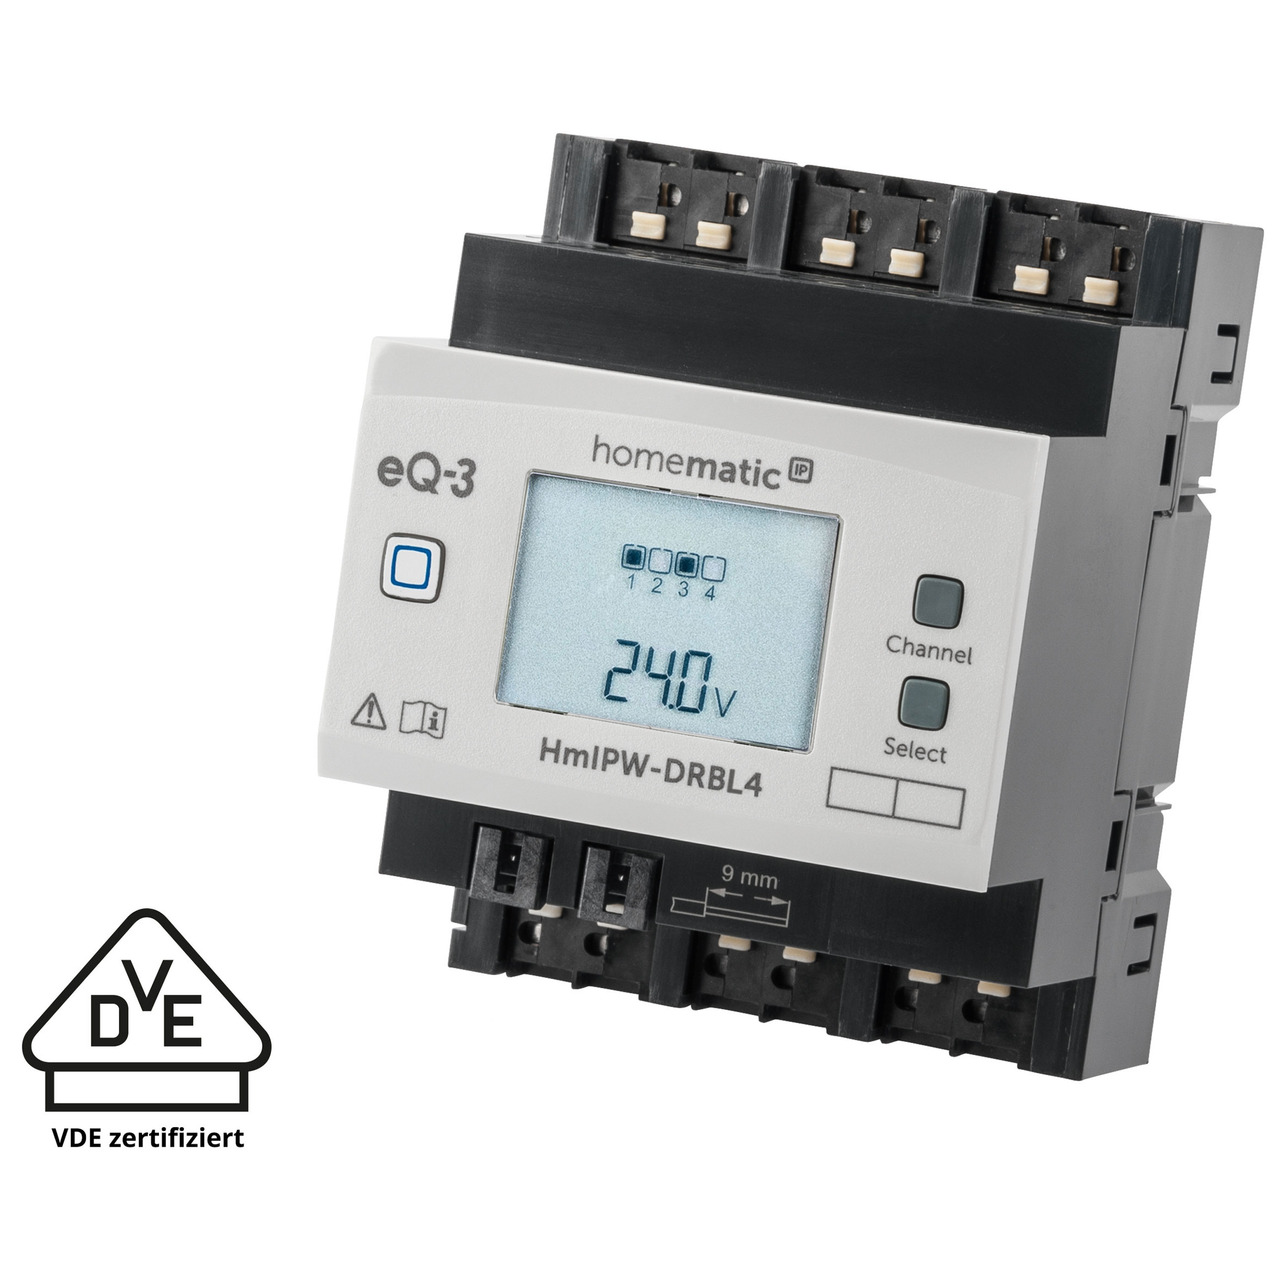 Homematic IP Wired Smart Home 4-fach-Jalousie-Rollladenaktor HmIPW-DRBL4- VDE zertifiziert unter Hausautomation